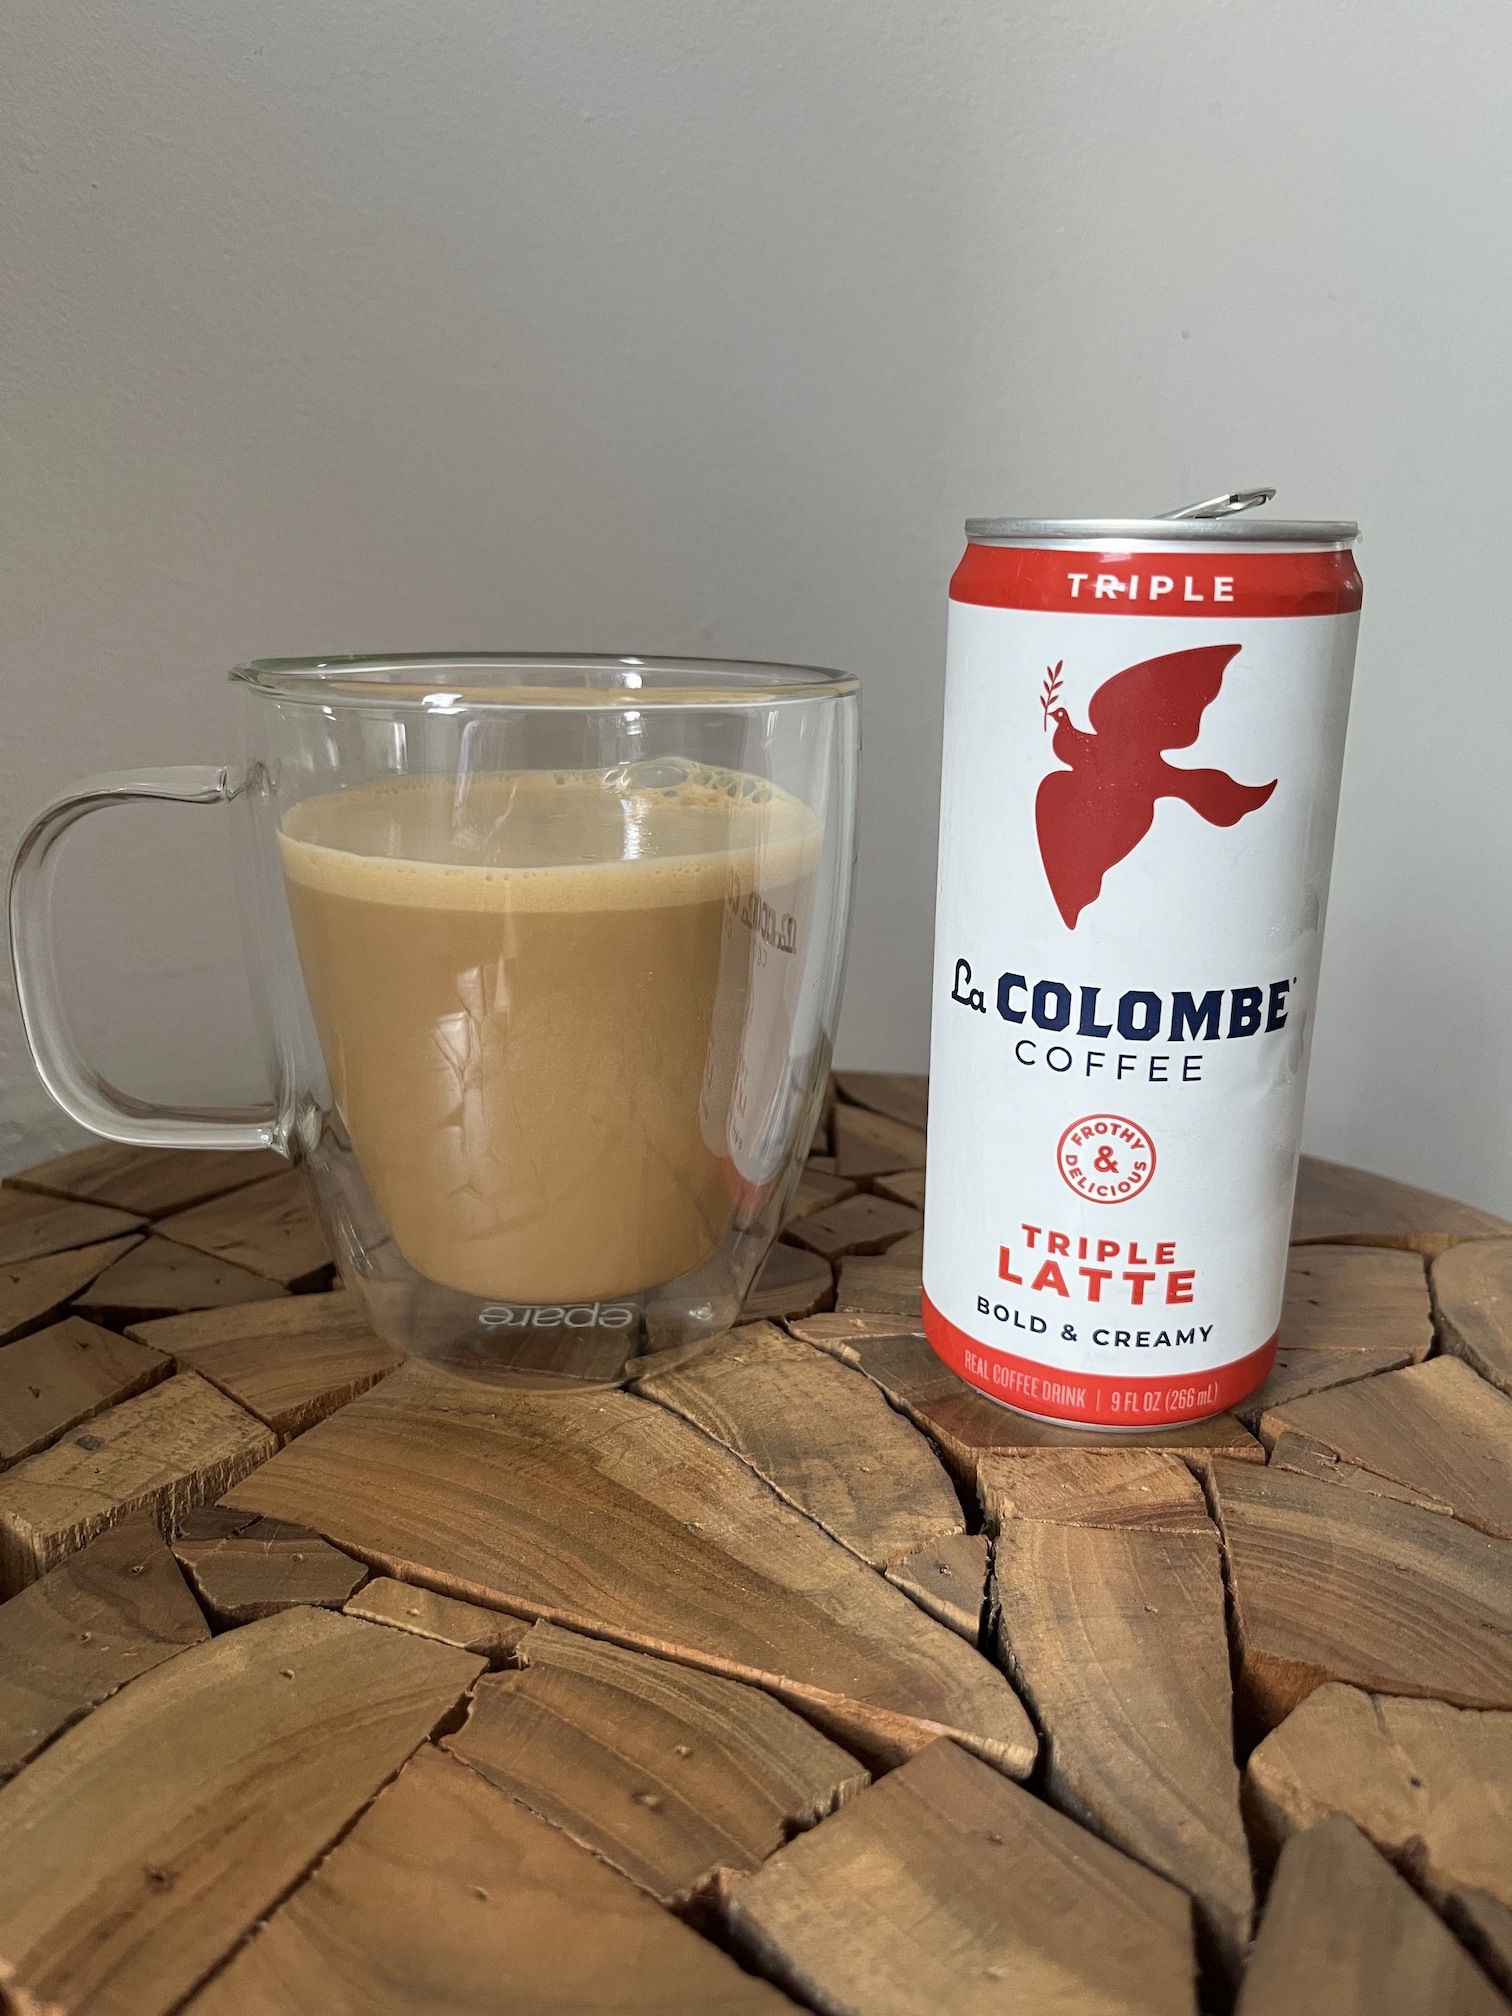 La Colombe: Triple Latte Sterk en romig